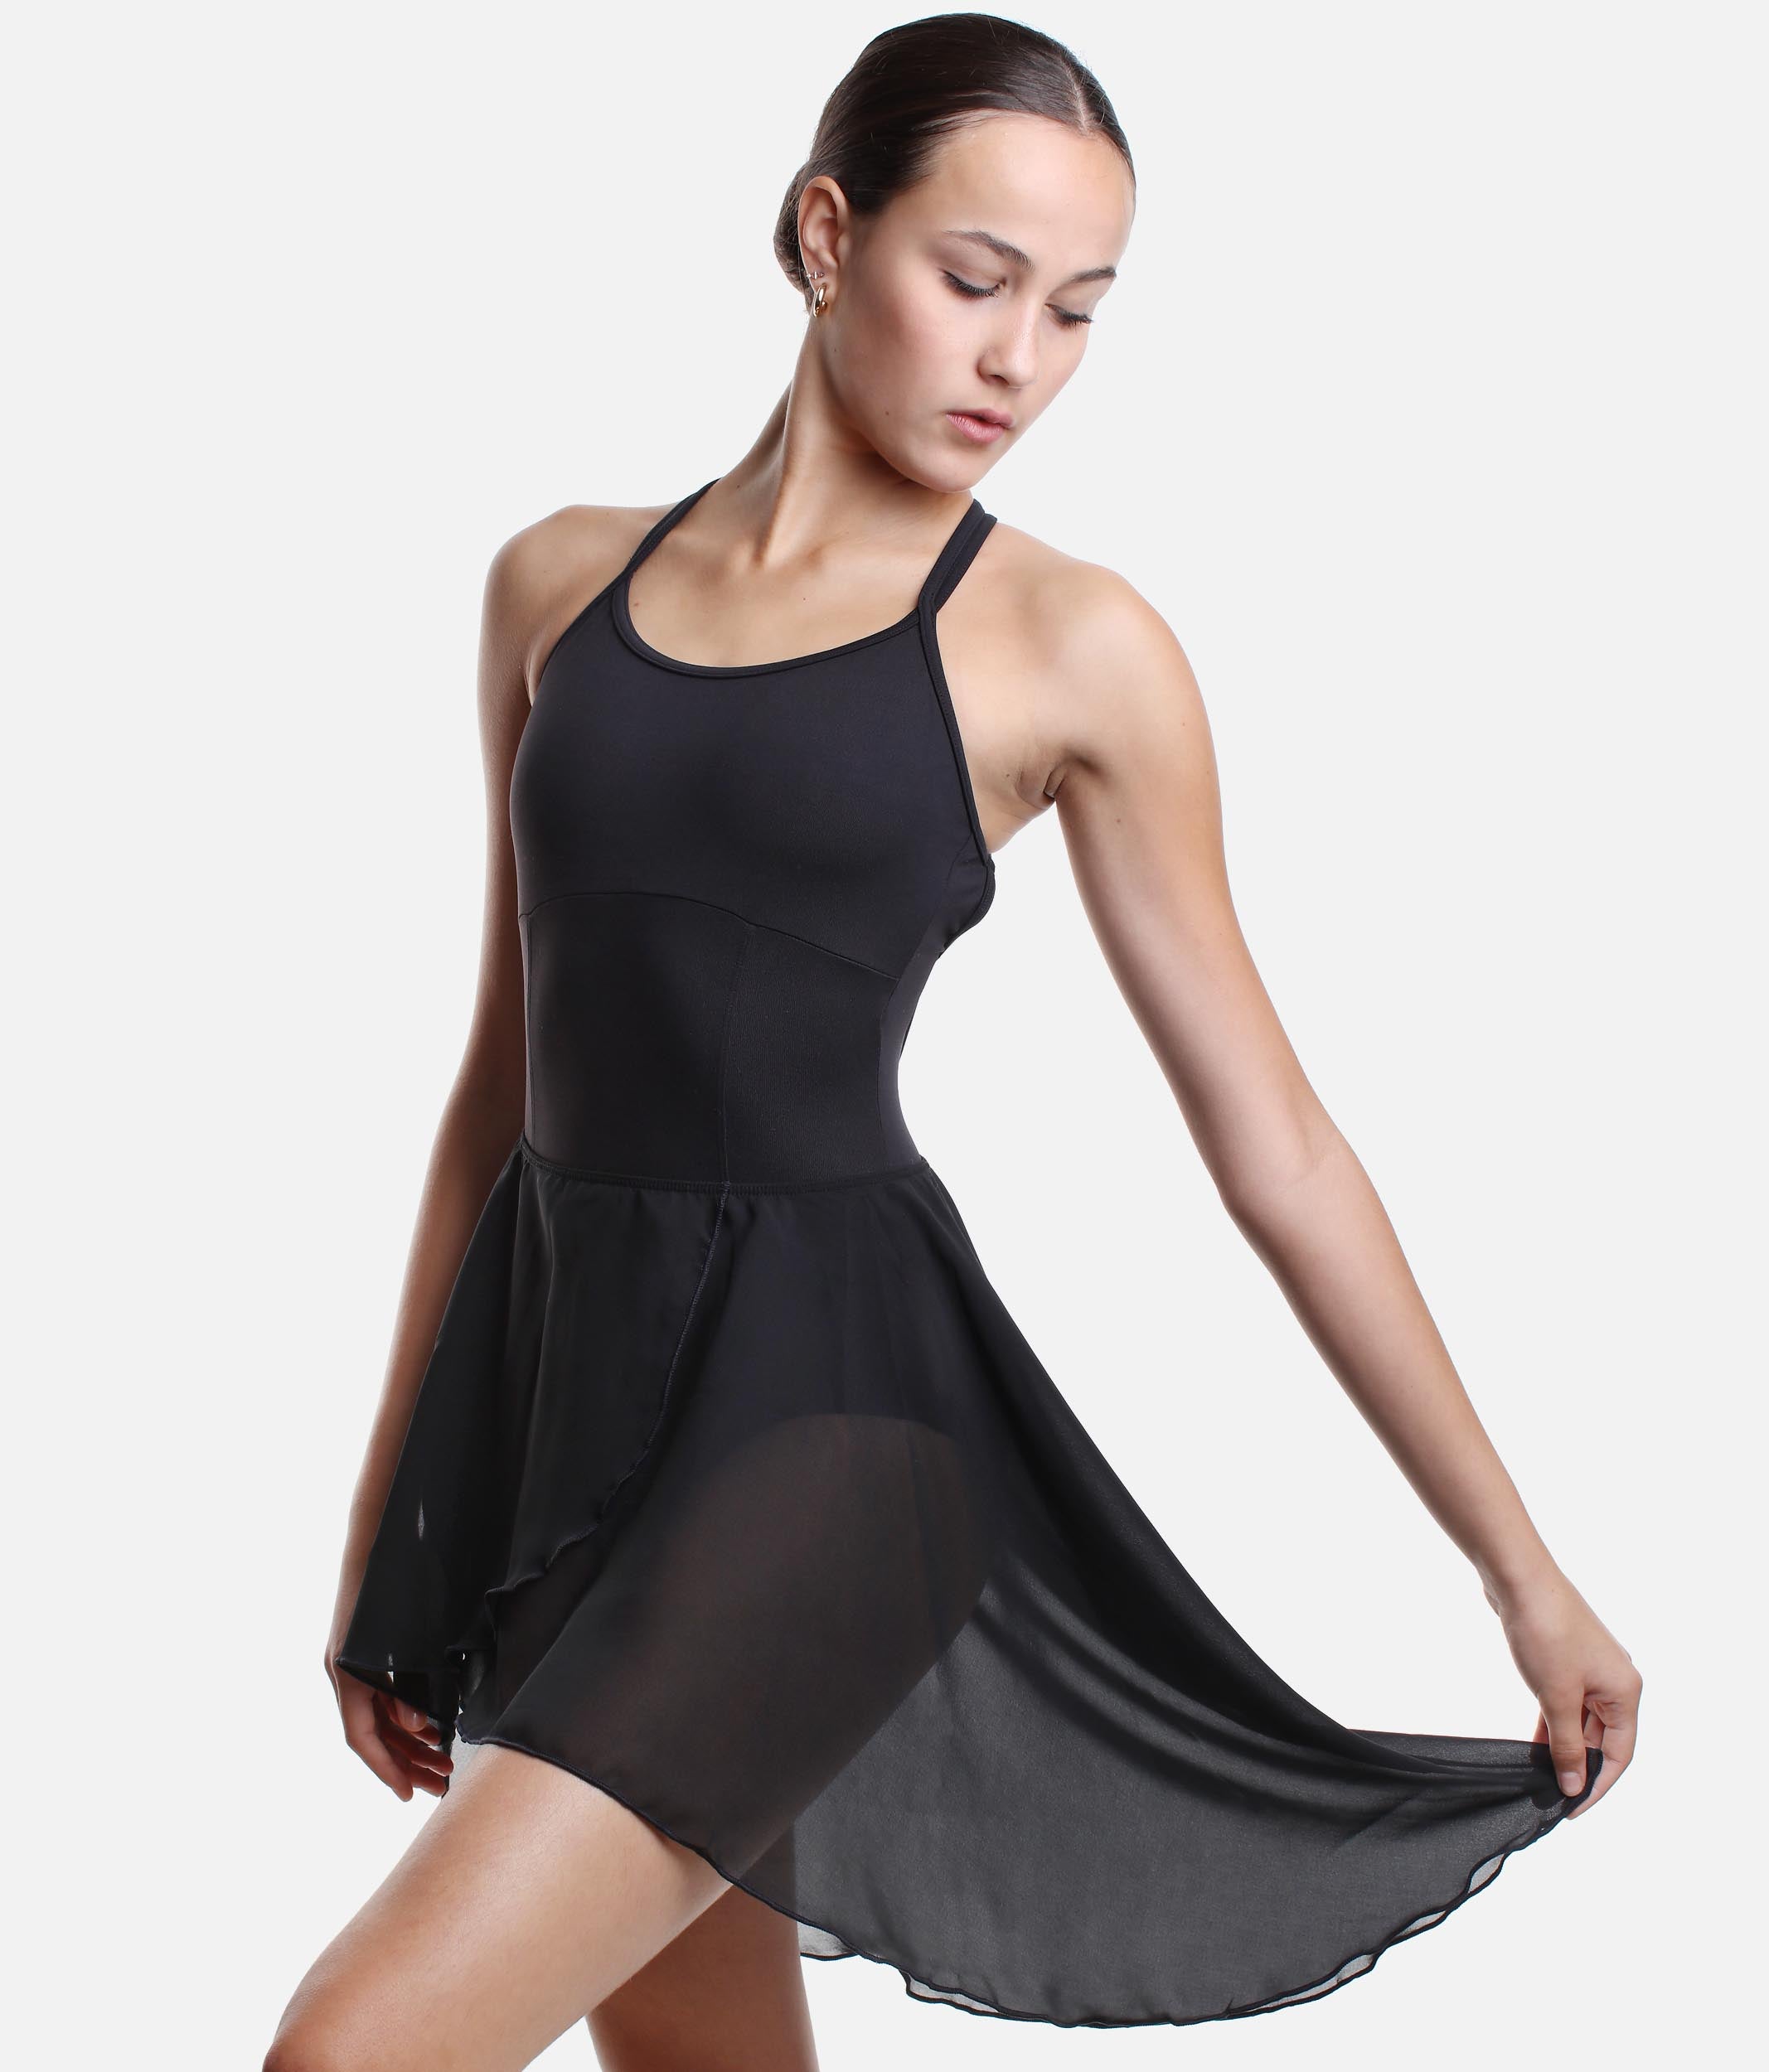 Long Tail Dance Skirt - 7799